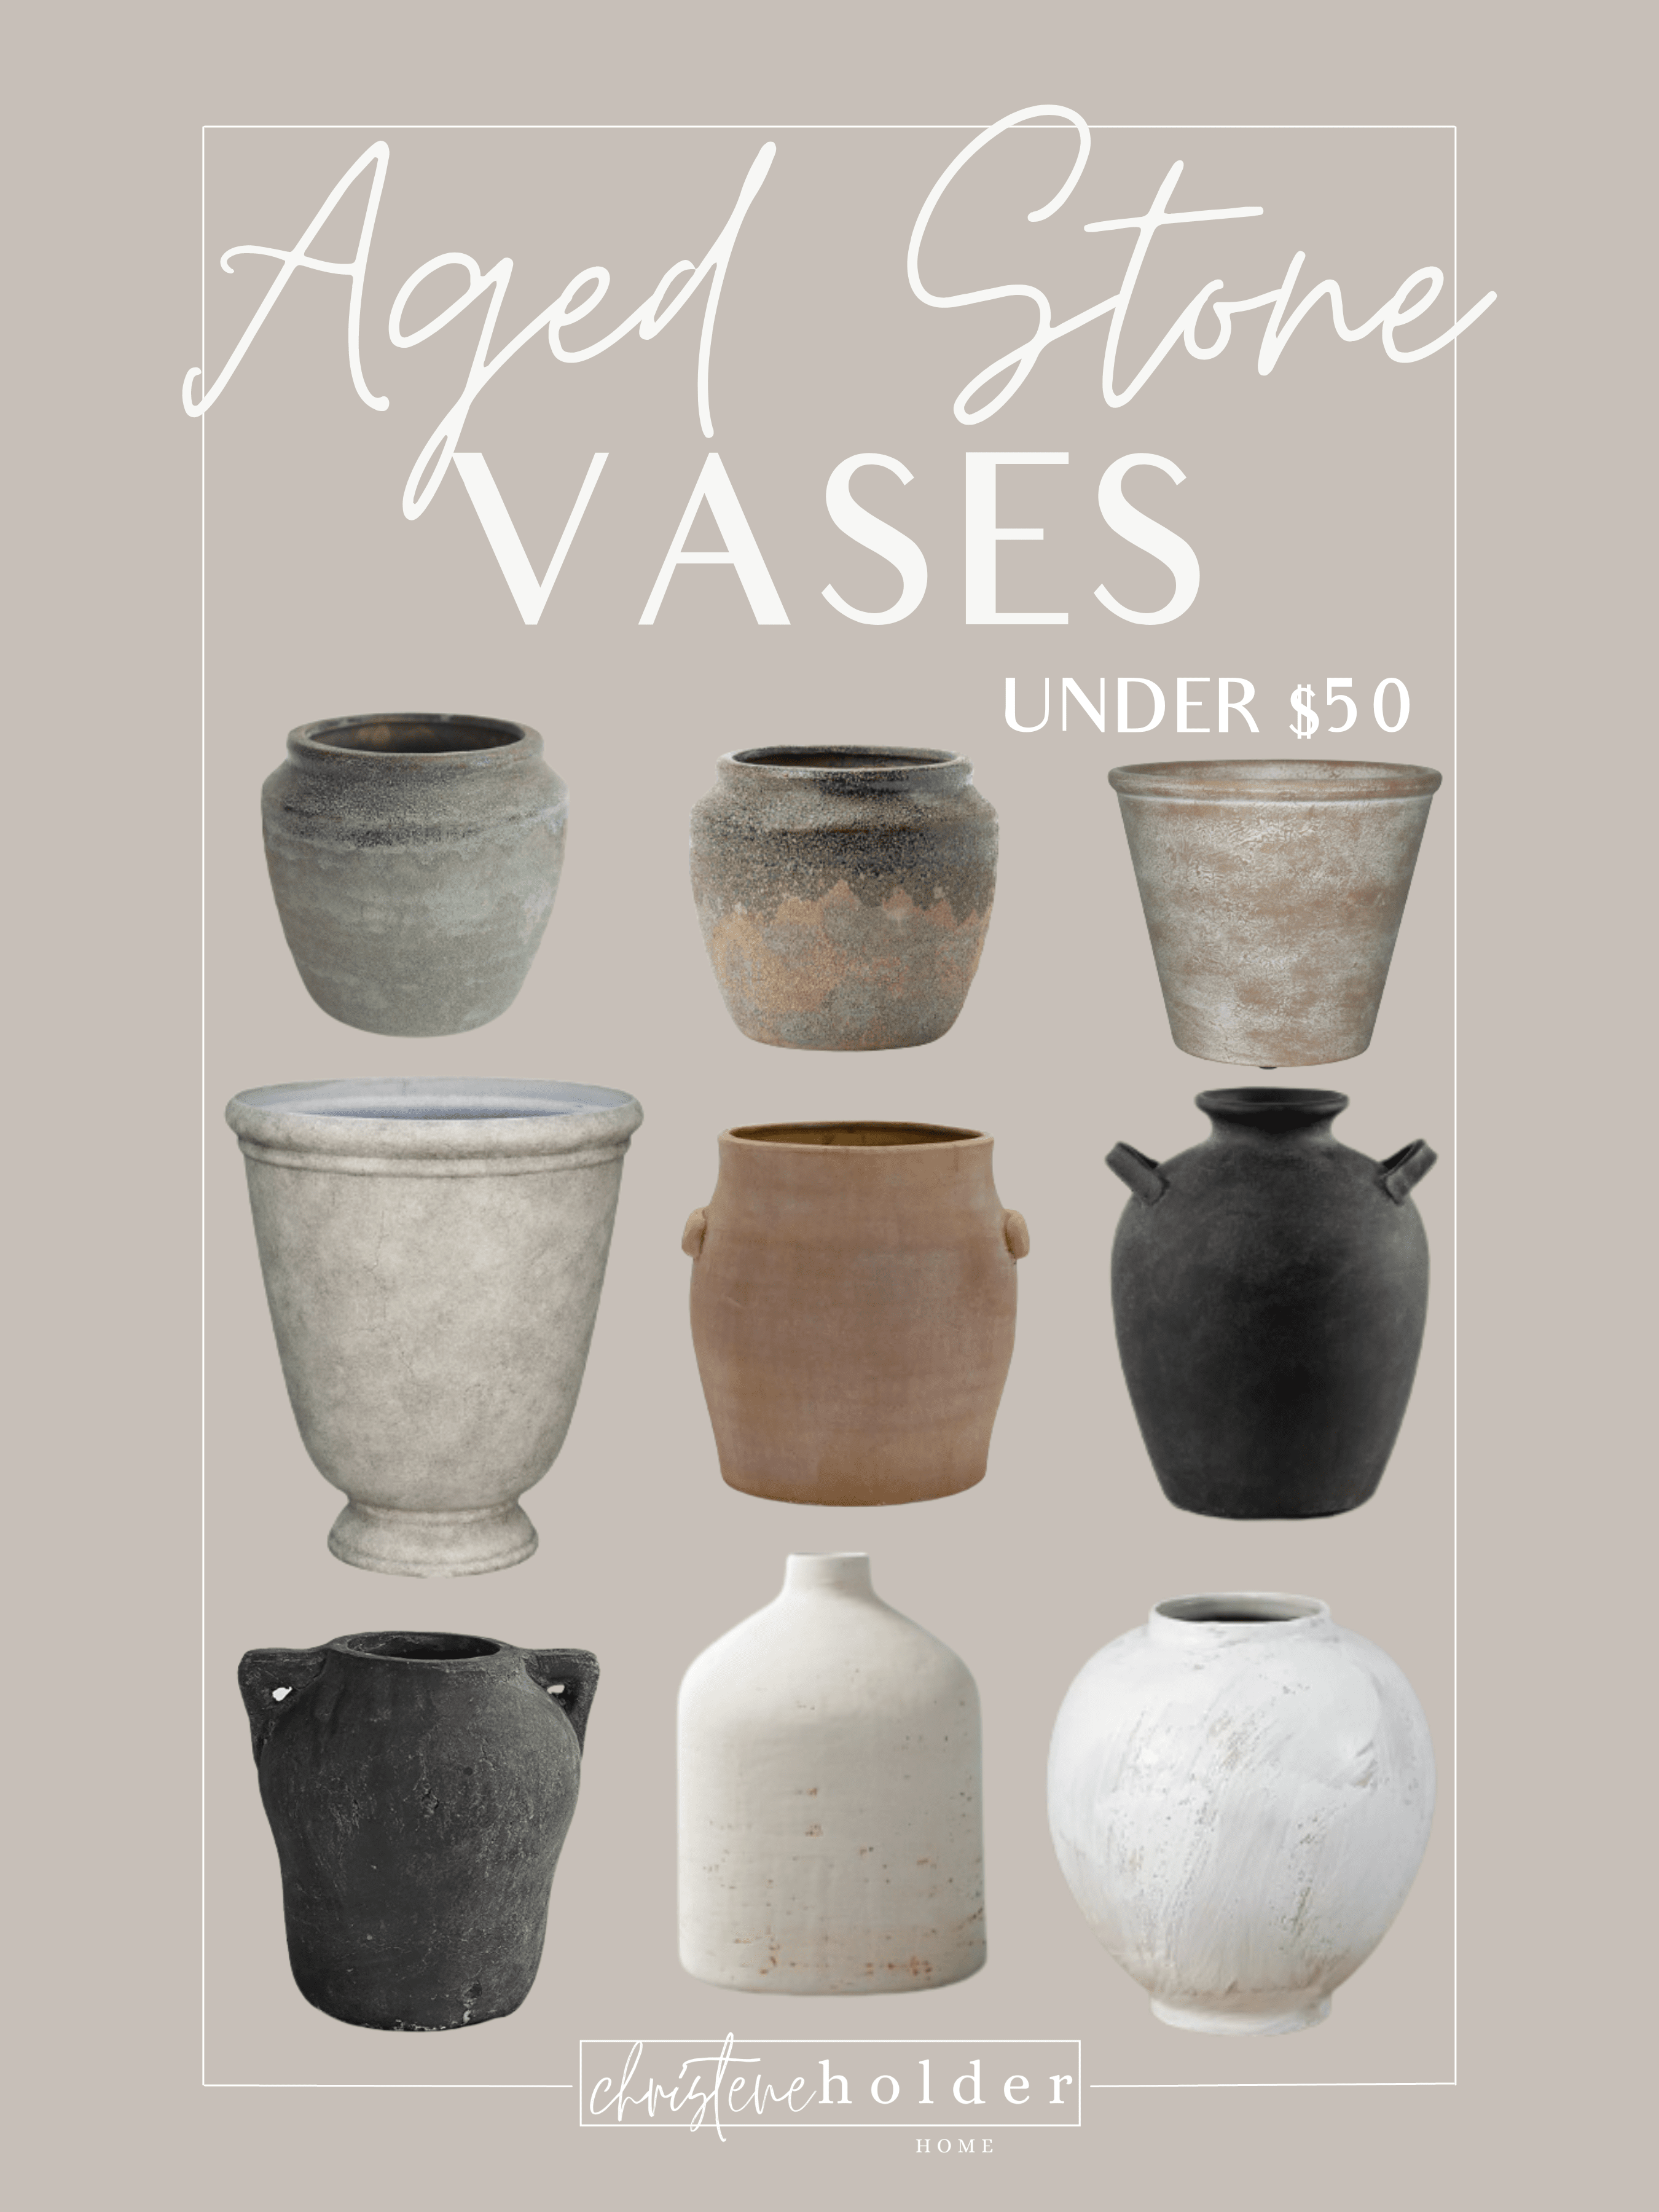 aged stone vases under $50